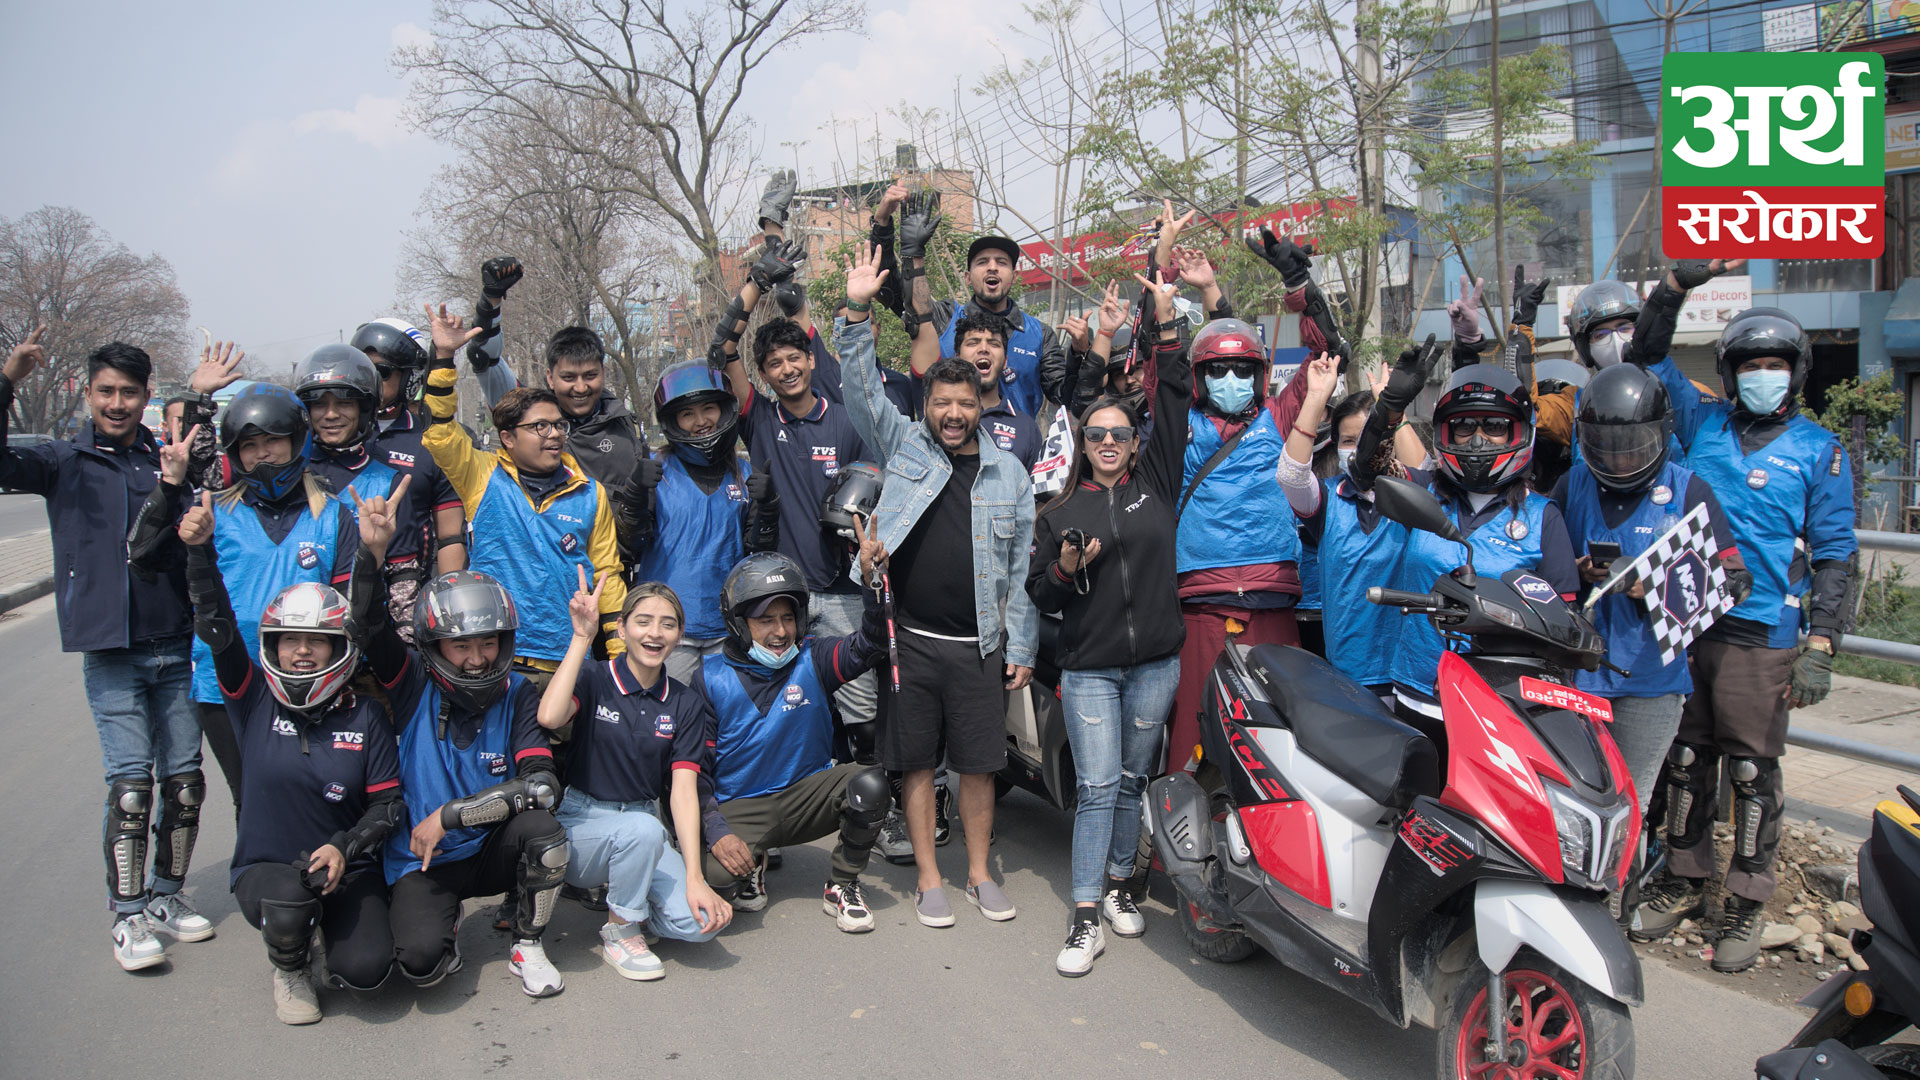 NOG Chapter Ride Completed in Kathmandu